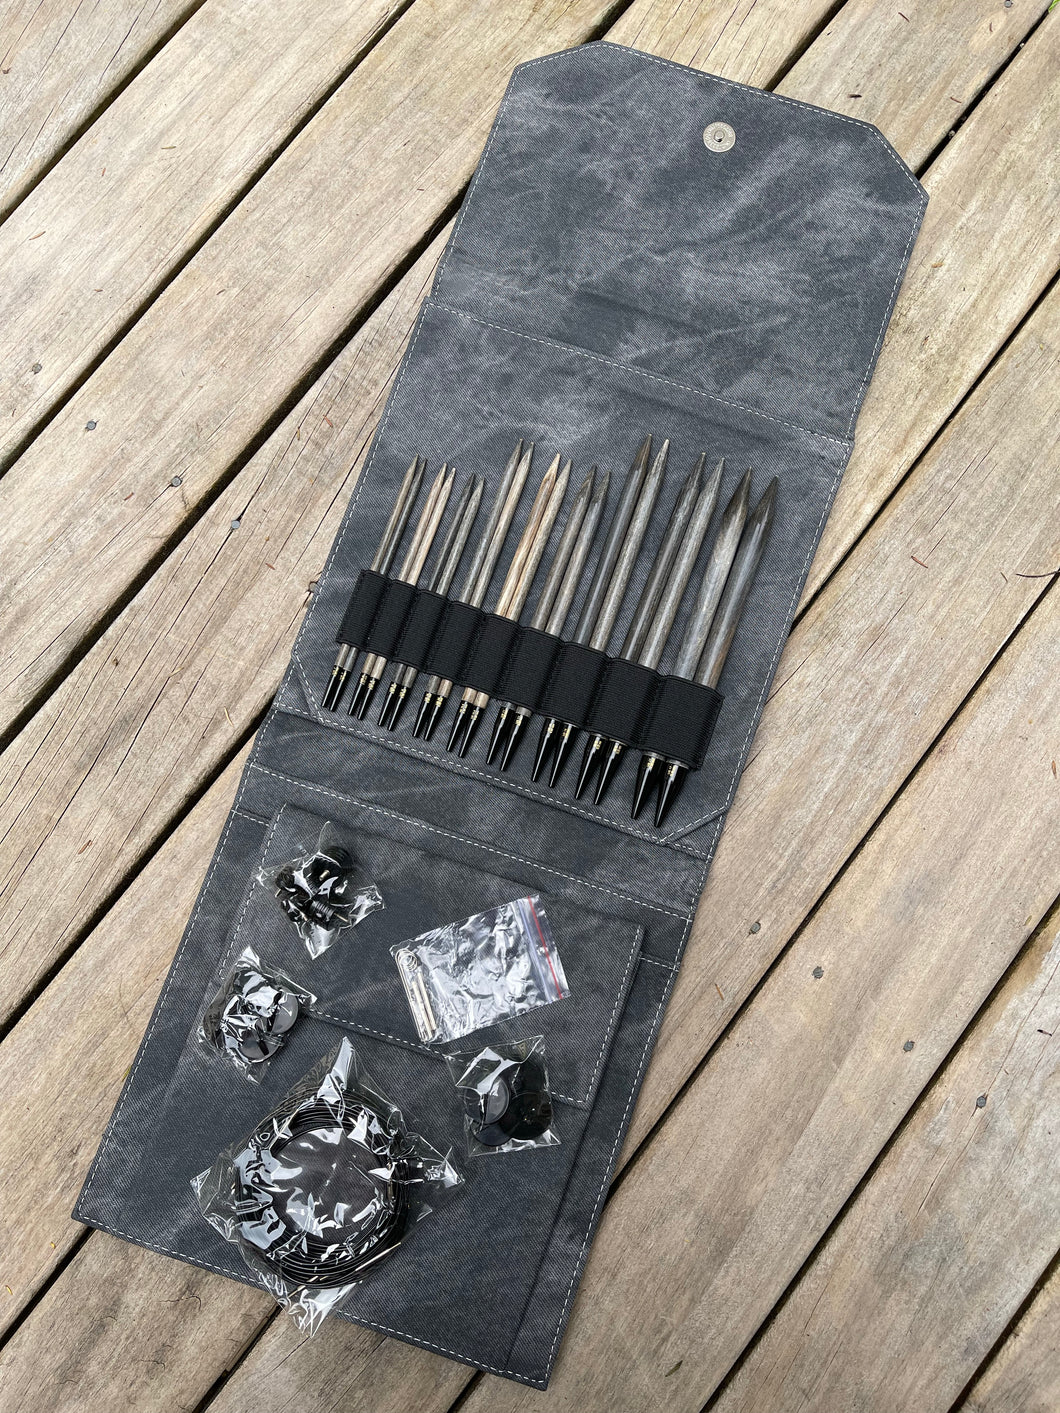 Lykke Birch Wood Interchangeable Circular Knitting Needle Sets